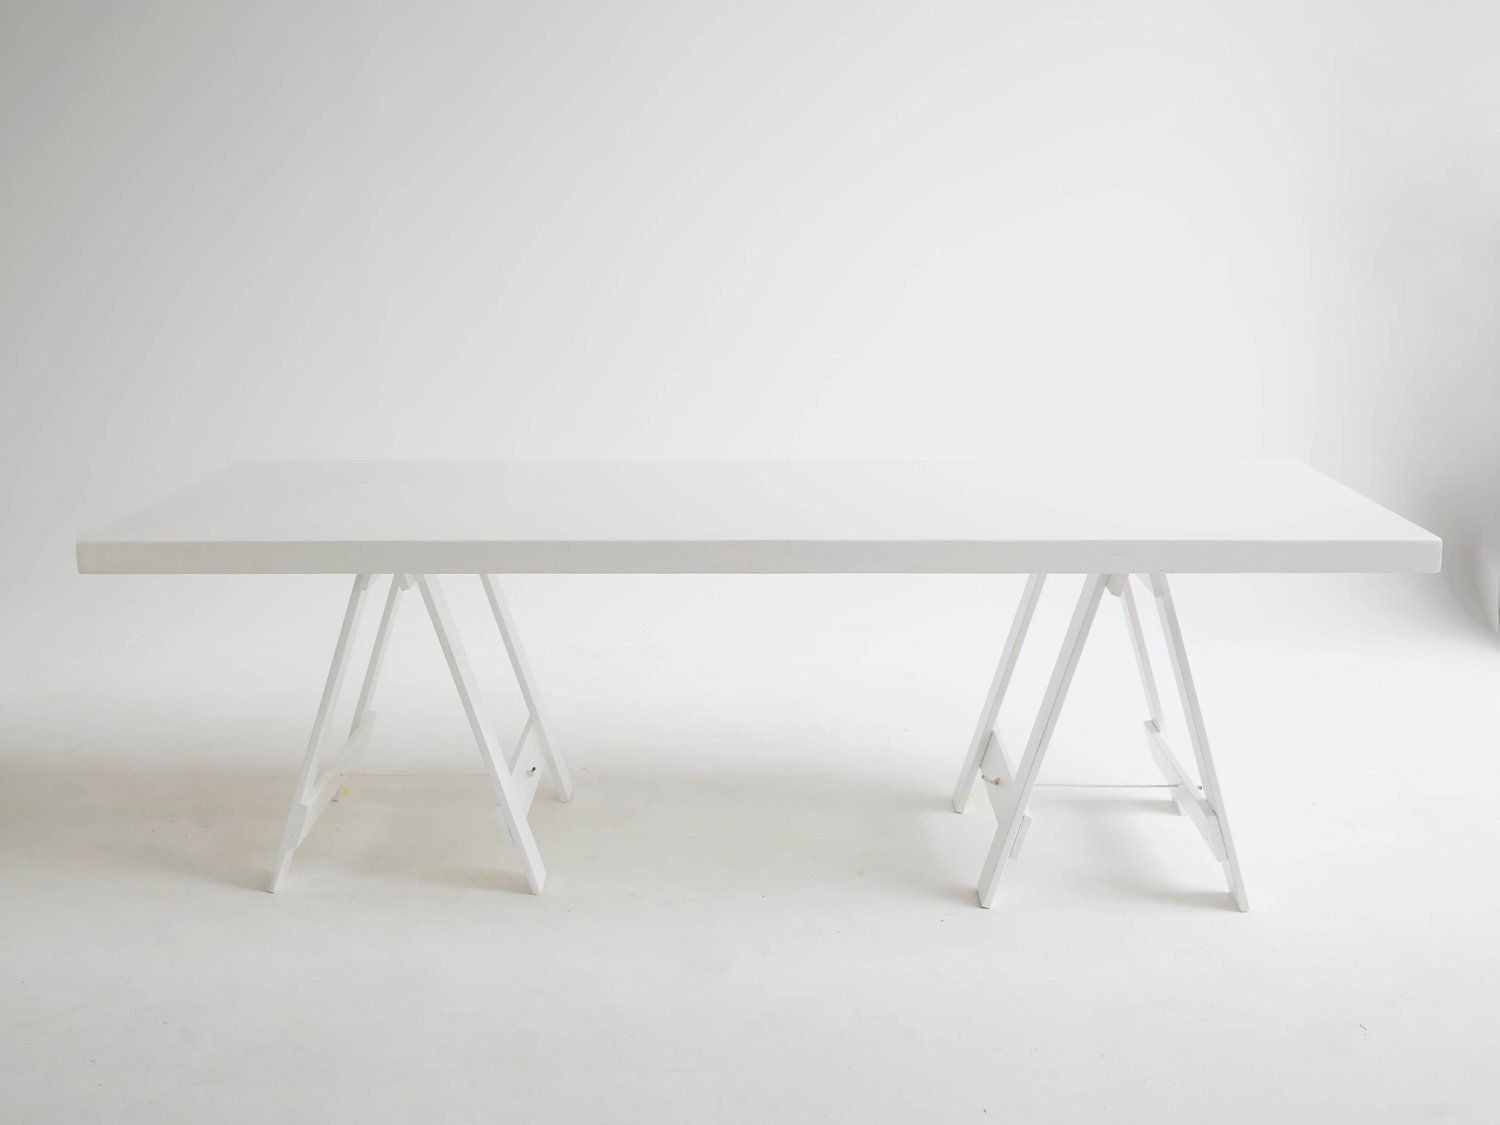 White Trestle Table I $65ea